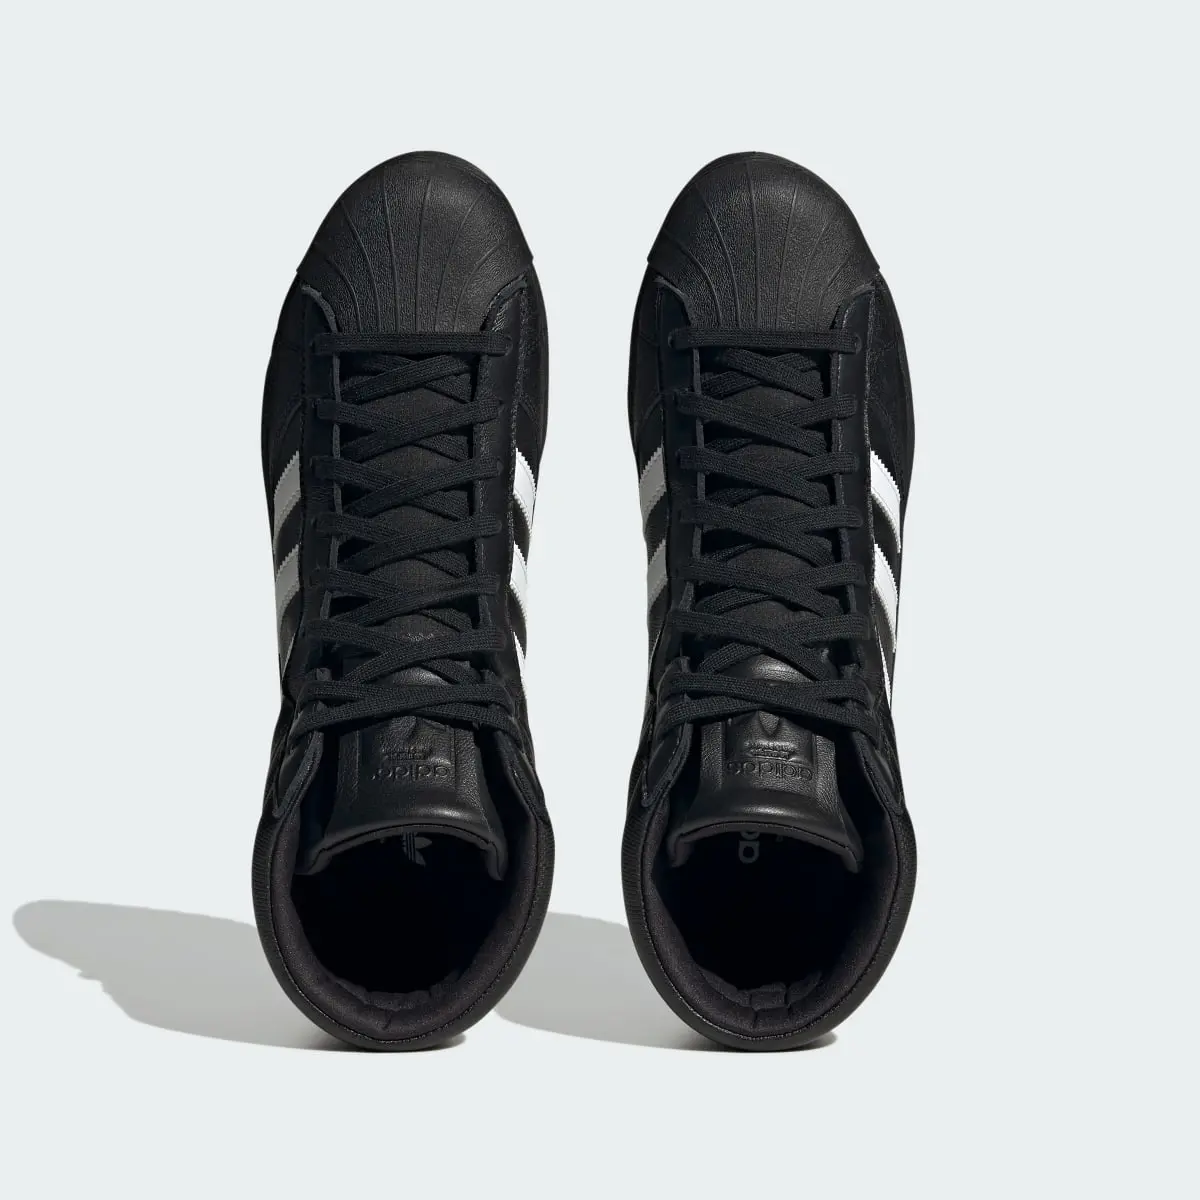 Adidas Superstar GORE-TEX Winter Boots. 3